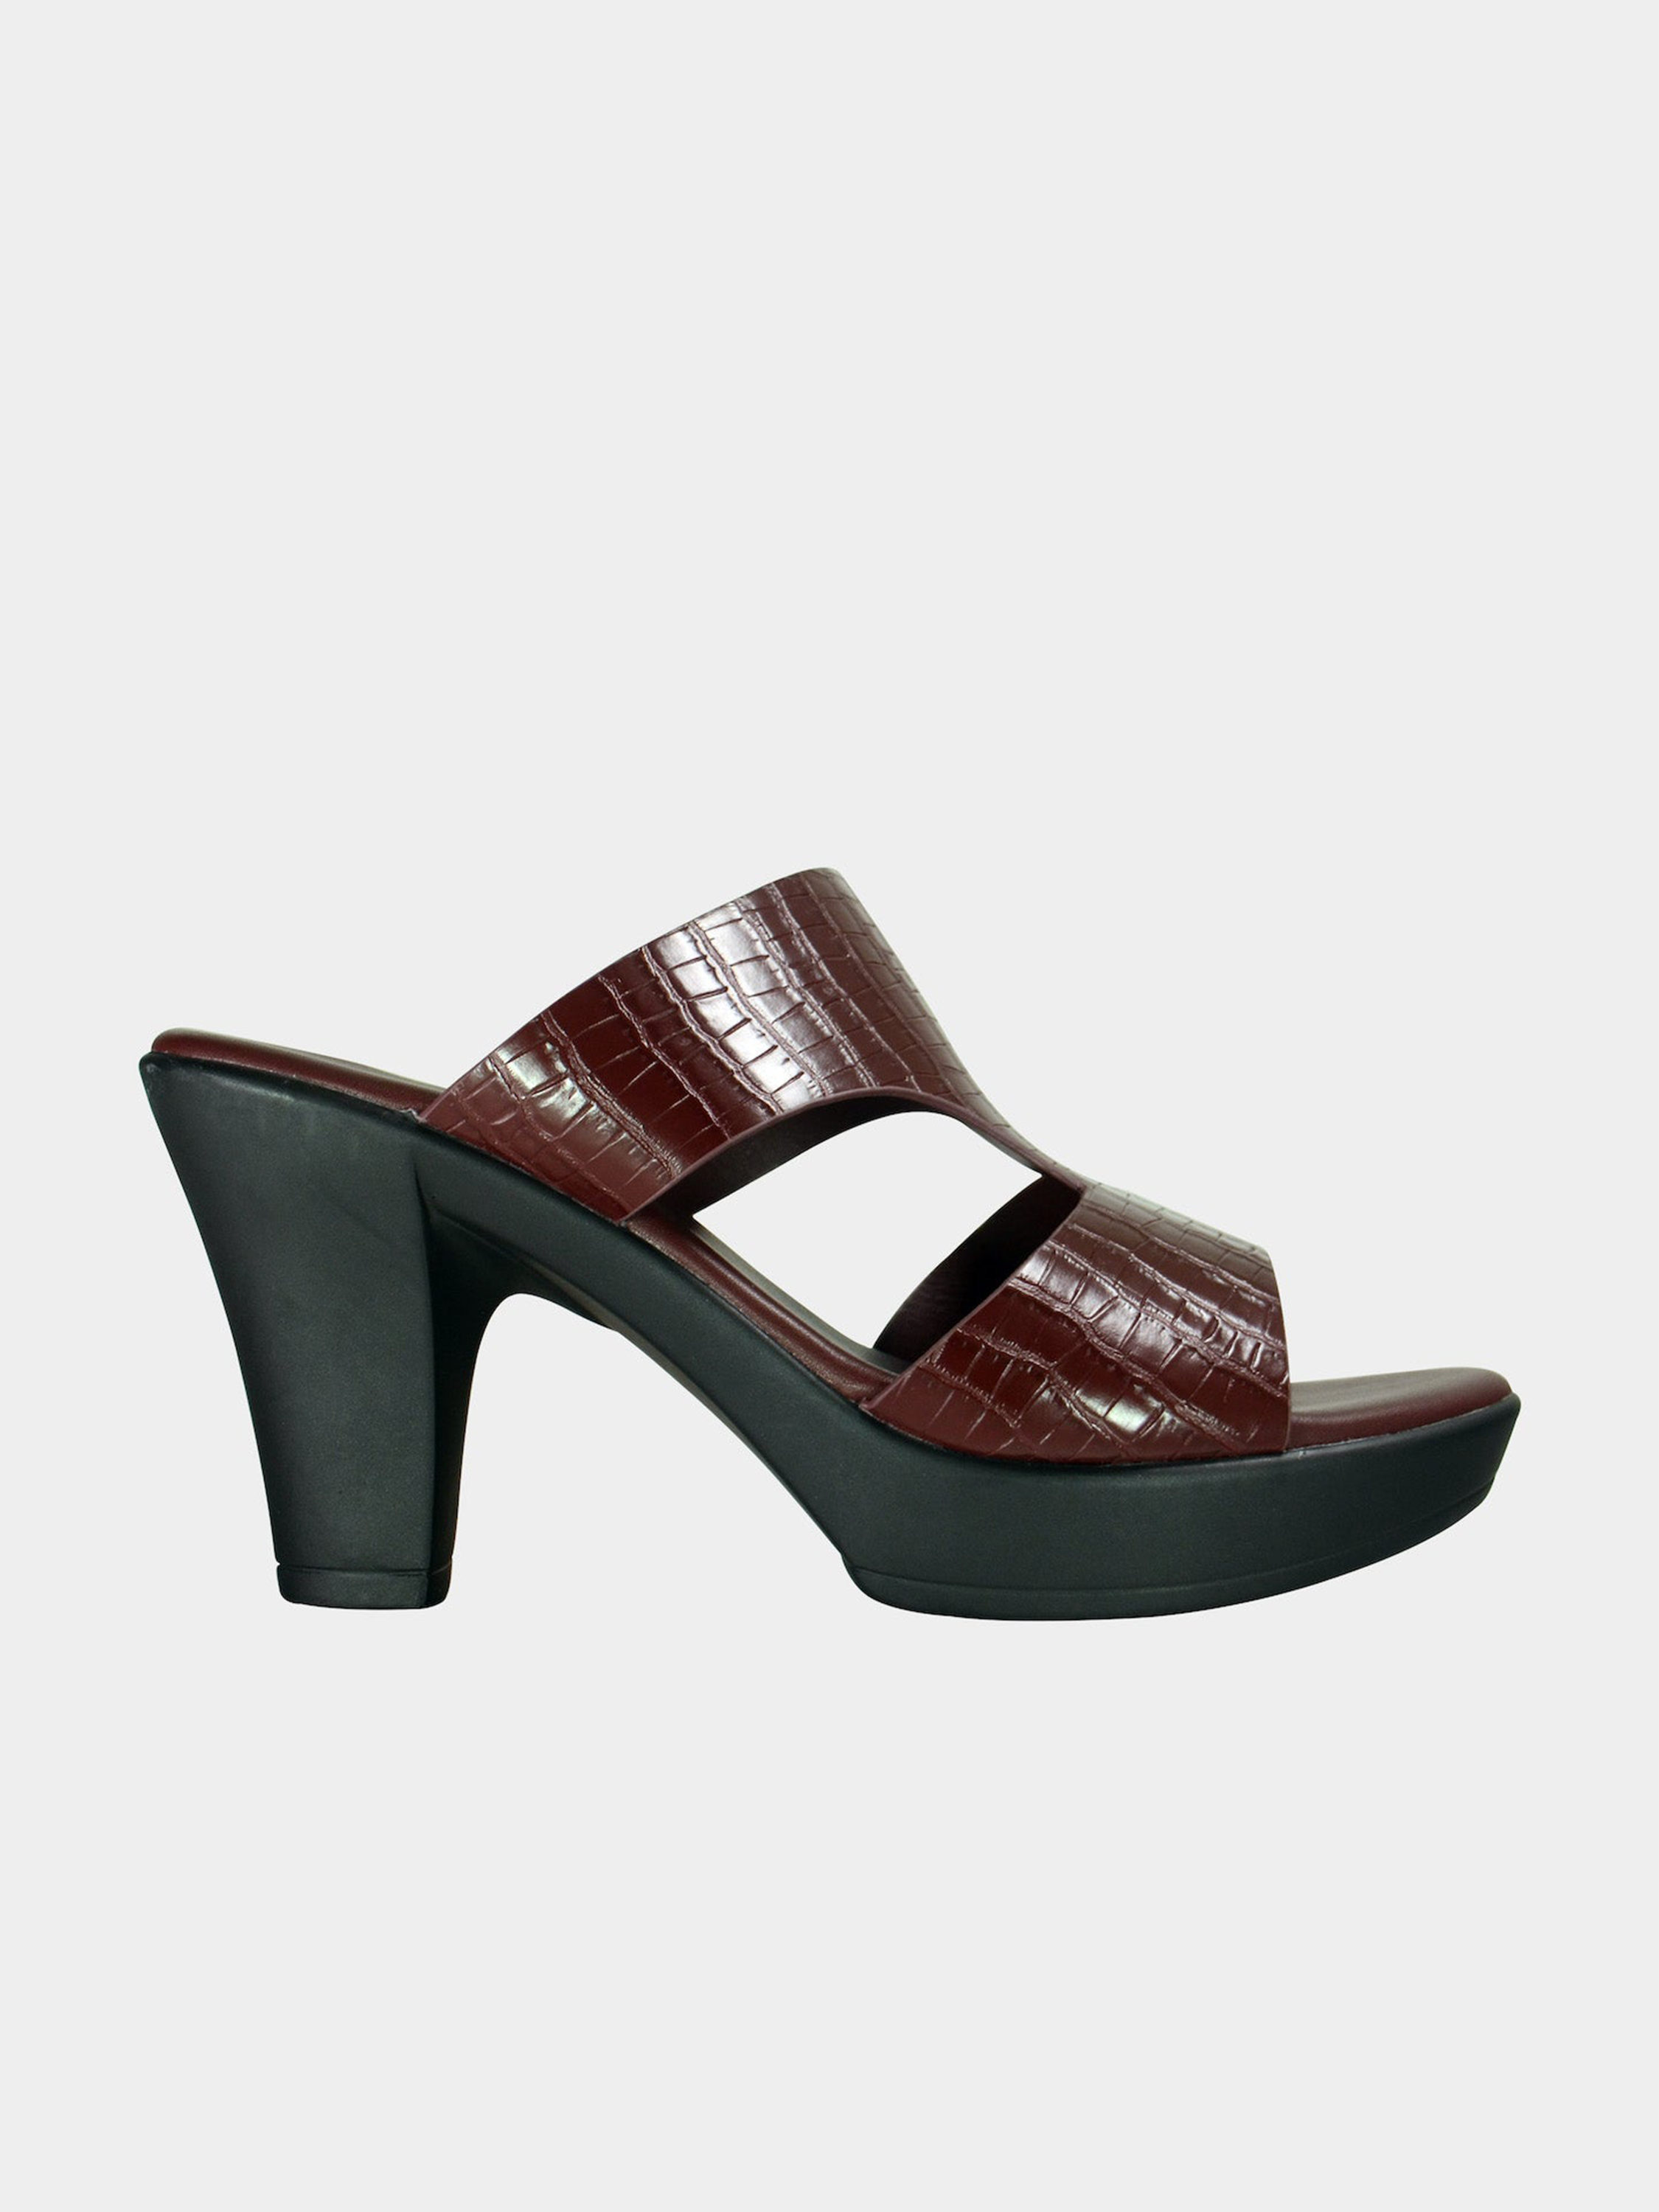 Michelle Morgan 913RJ095 Women's Heeled Sandals #color_Brown